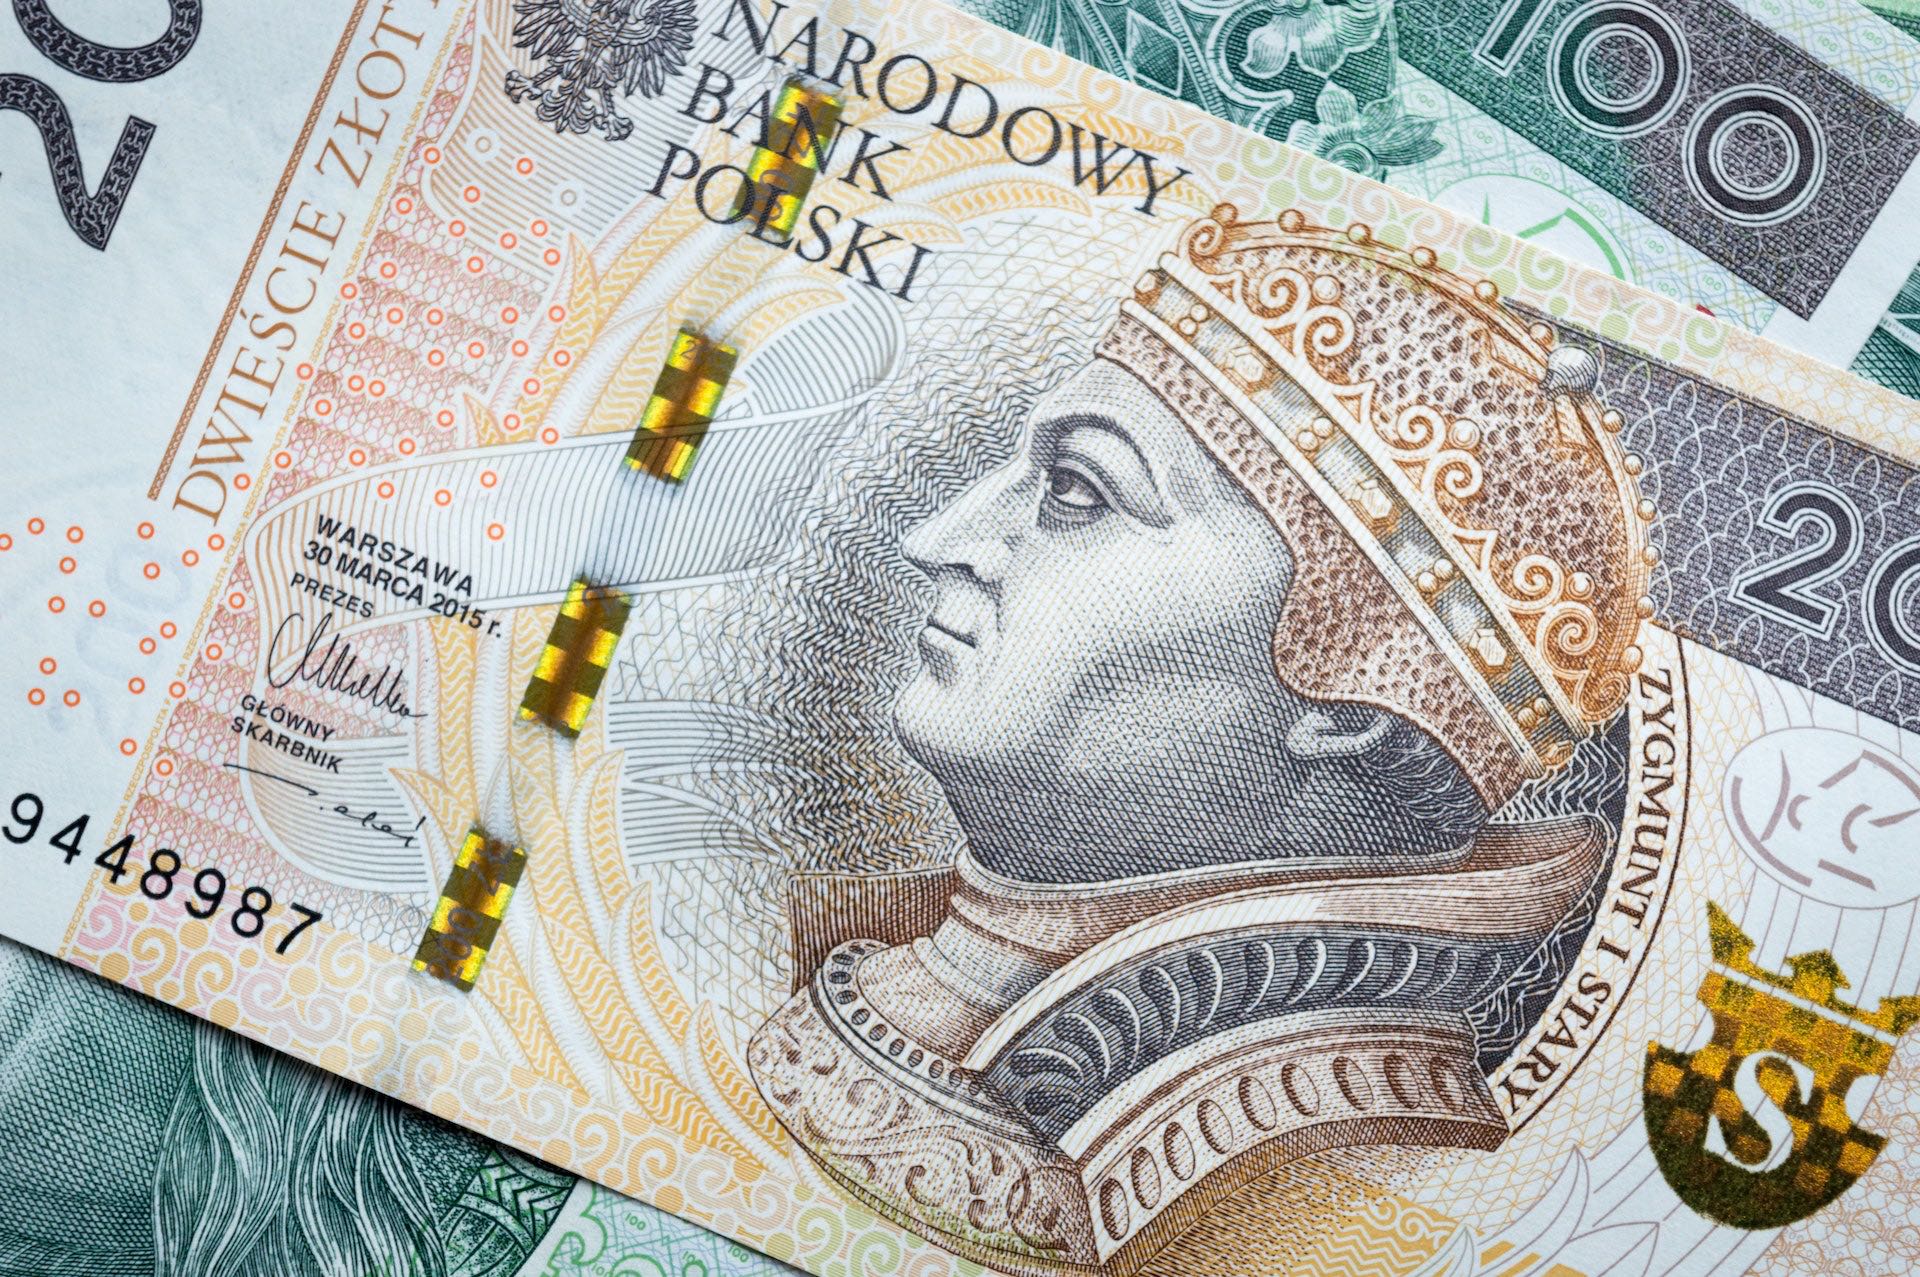 PLN Poland money